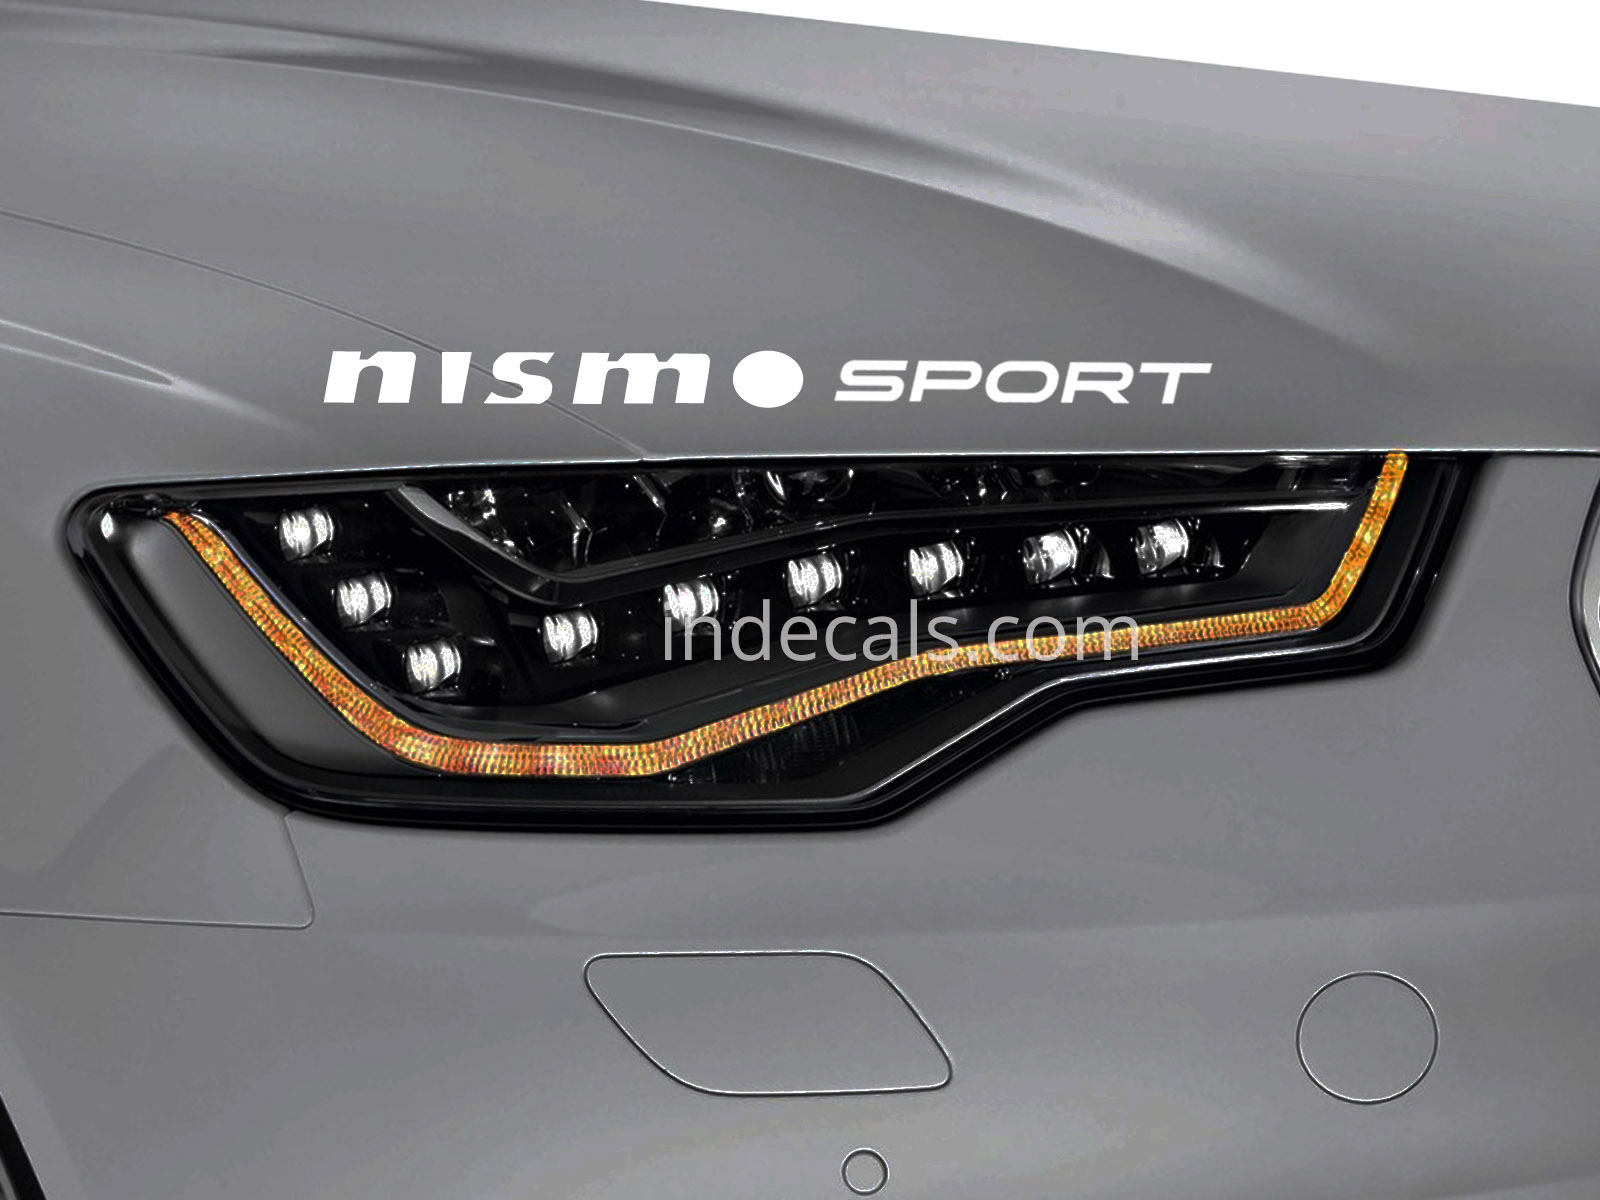 1 x Nismo Sport Sticker for Eyebrow - White